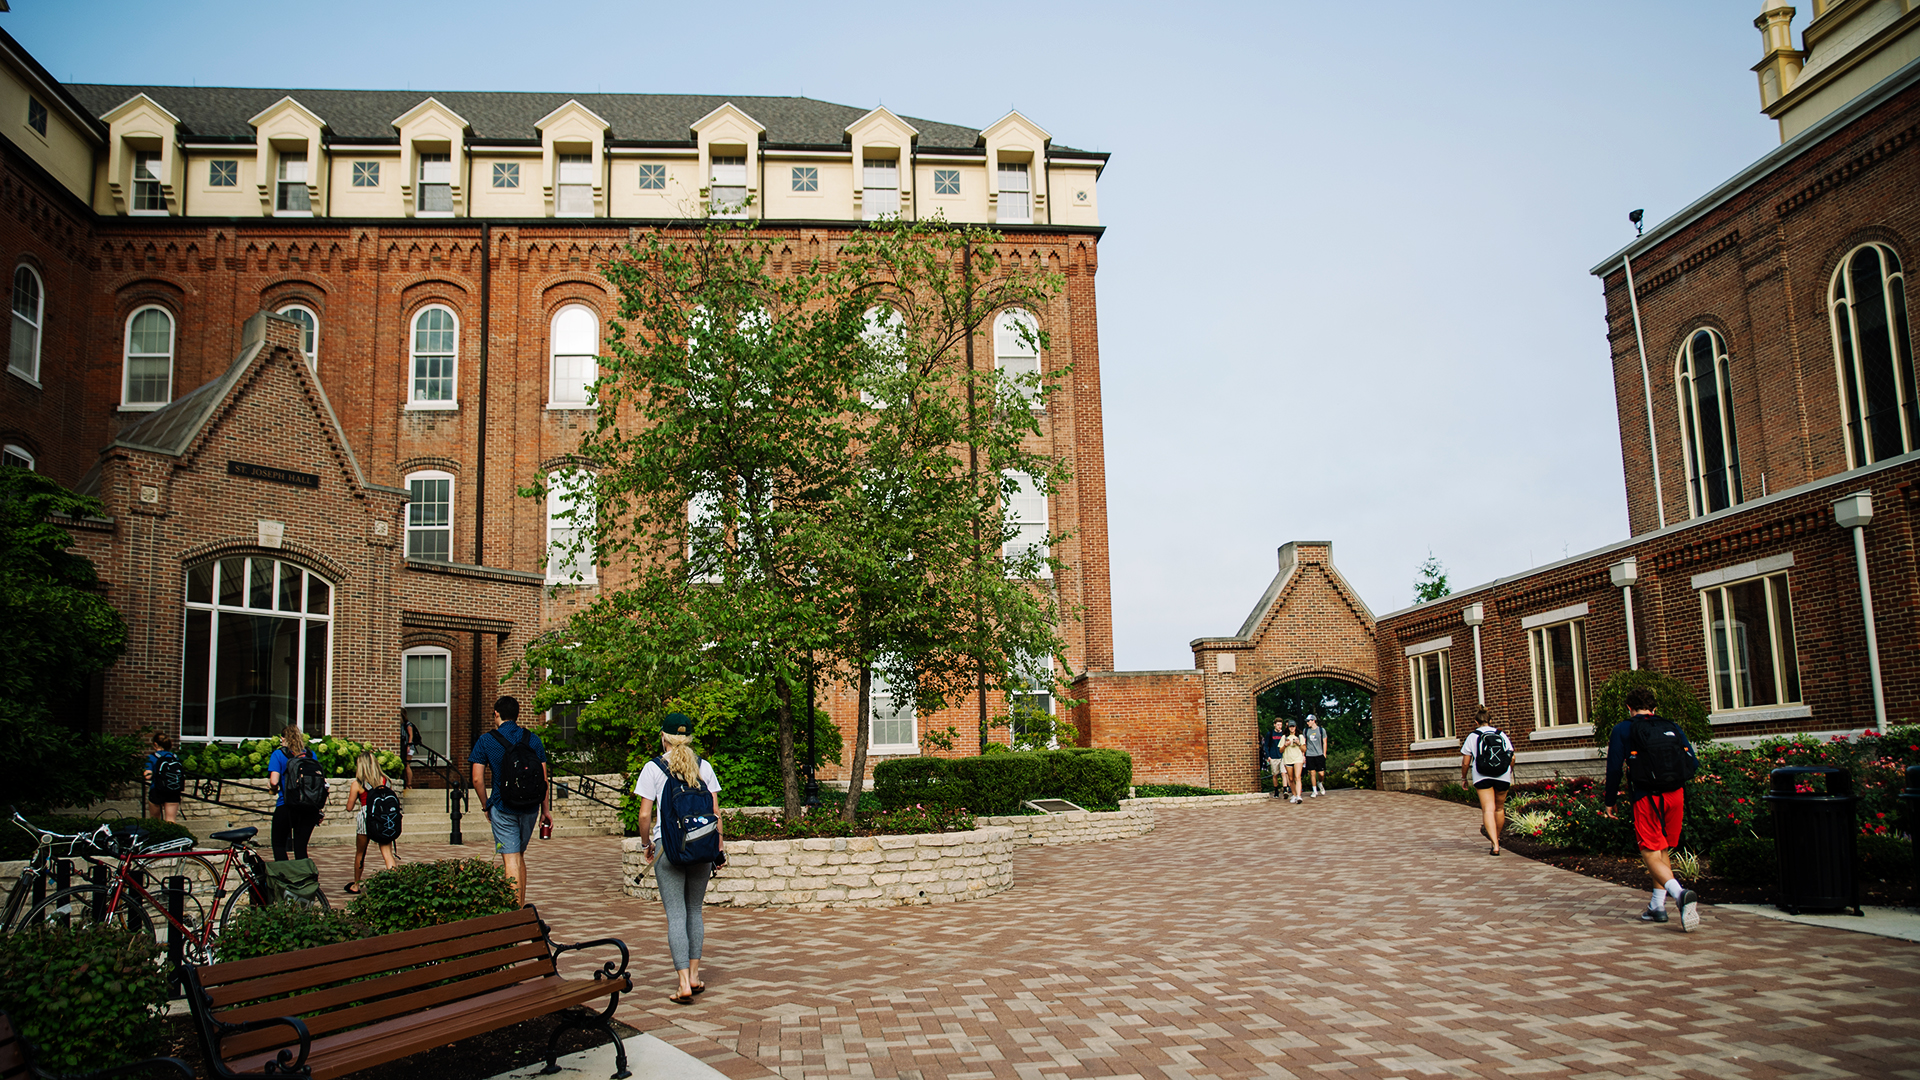 Background Image: St. Joseph Hall Courtyard by University of Dayton